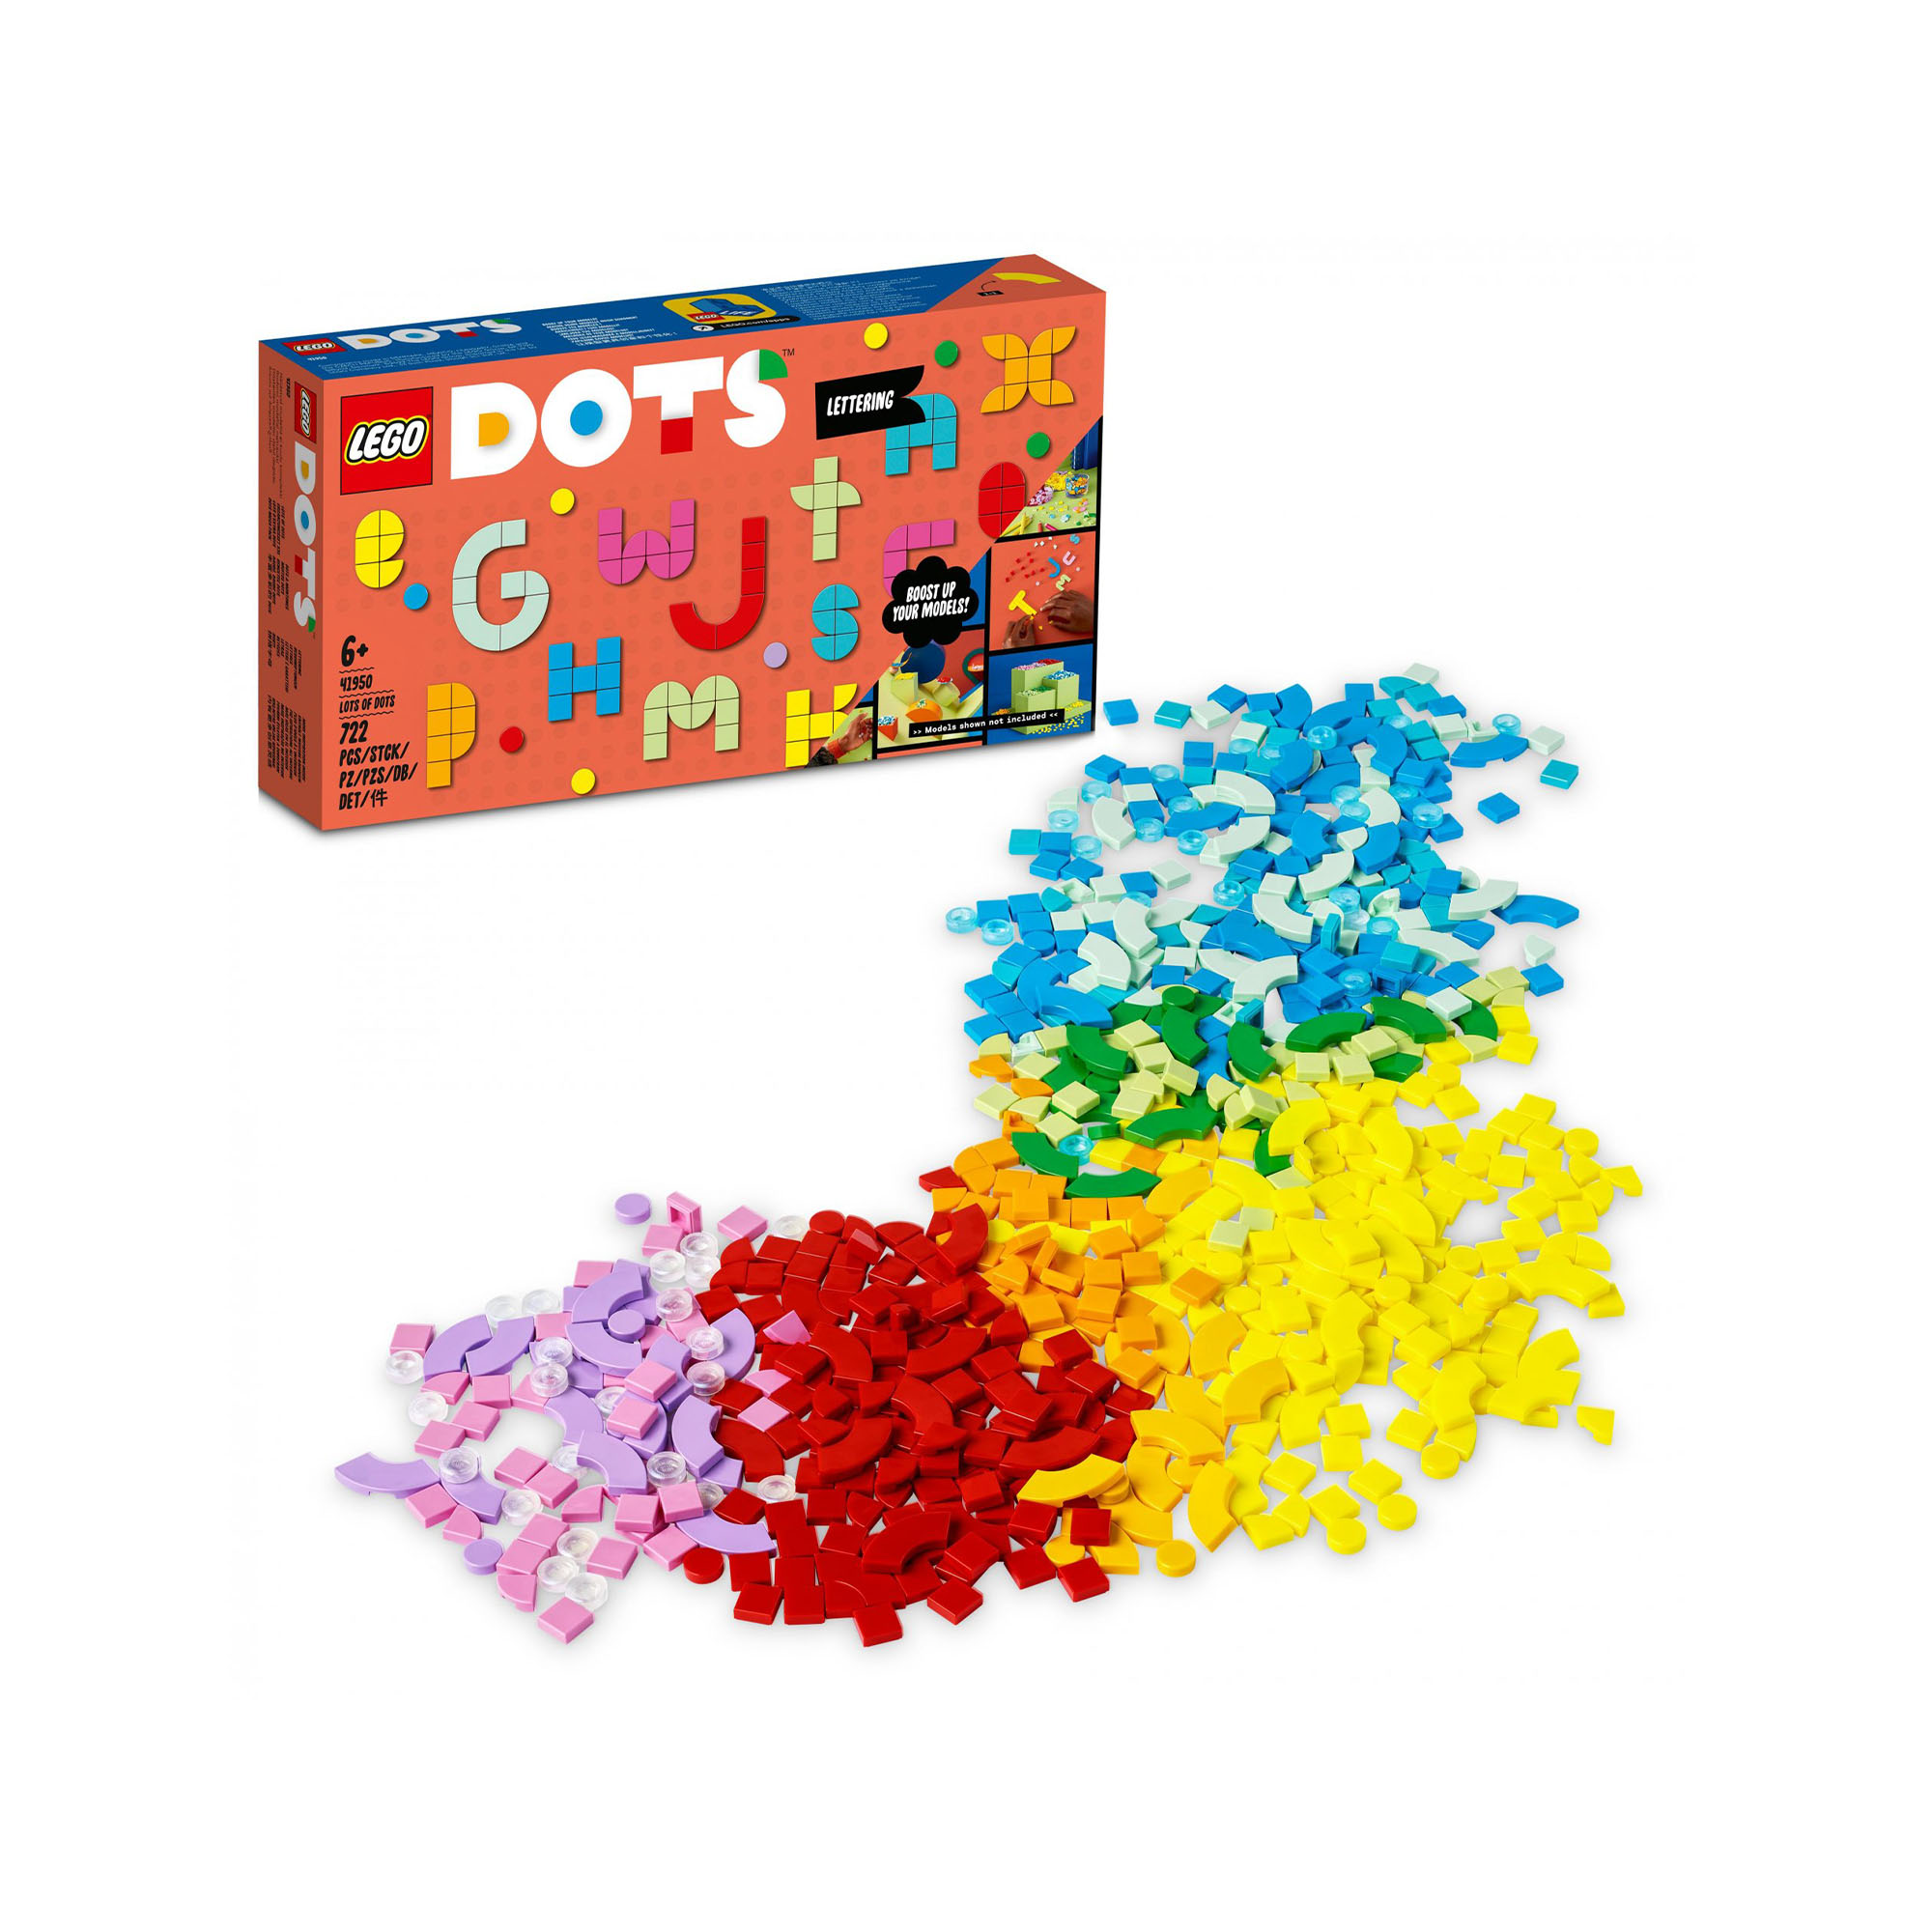 LEGO 41950 DOTS MEGA PACK - Lettere e Caratteri, Giochi per Bambini dai 6 Anni i 41950, , large